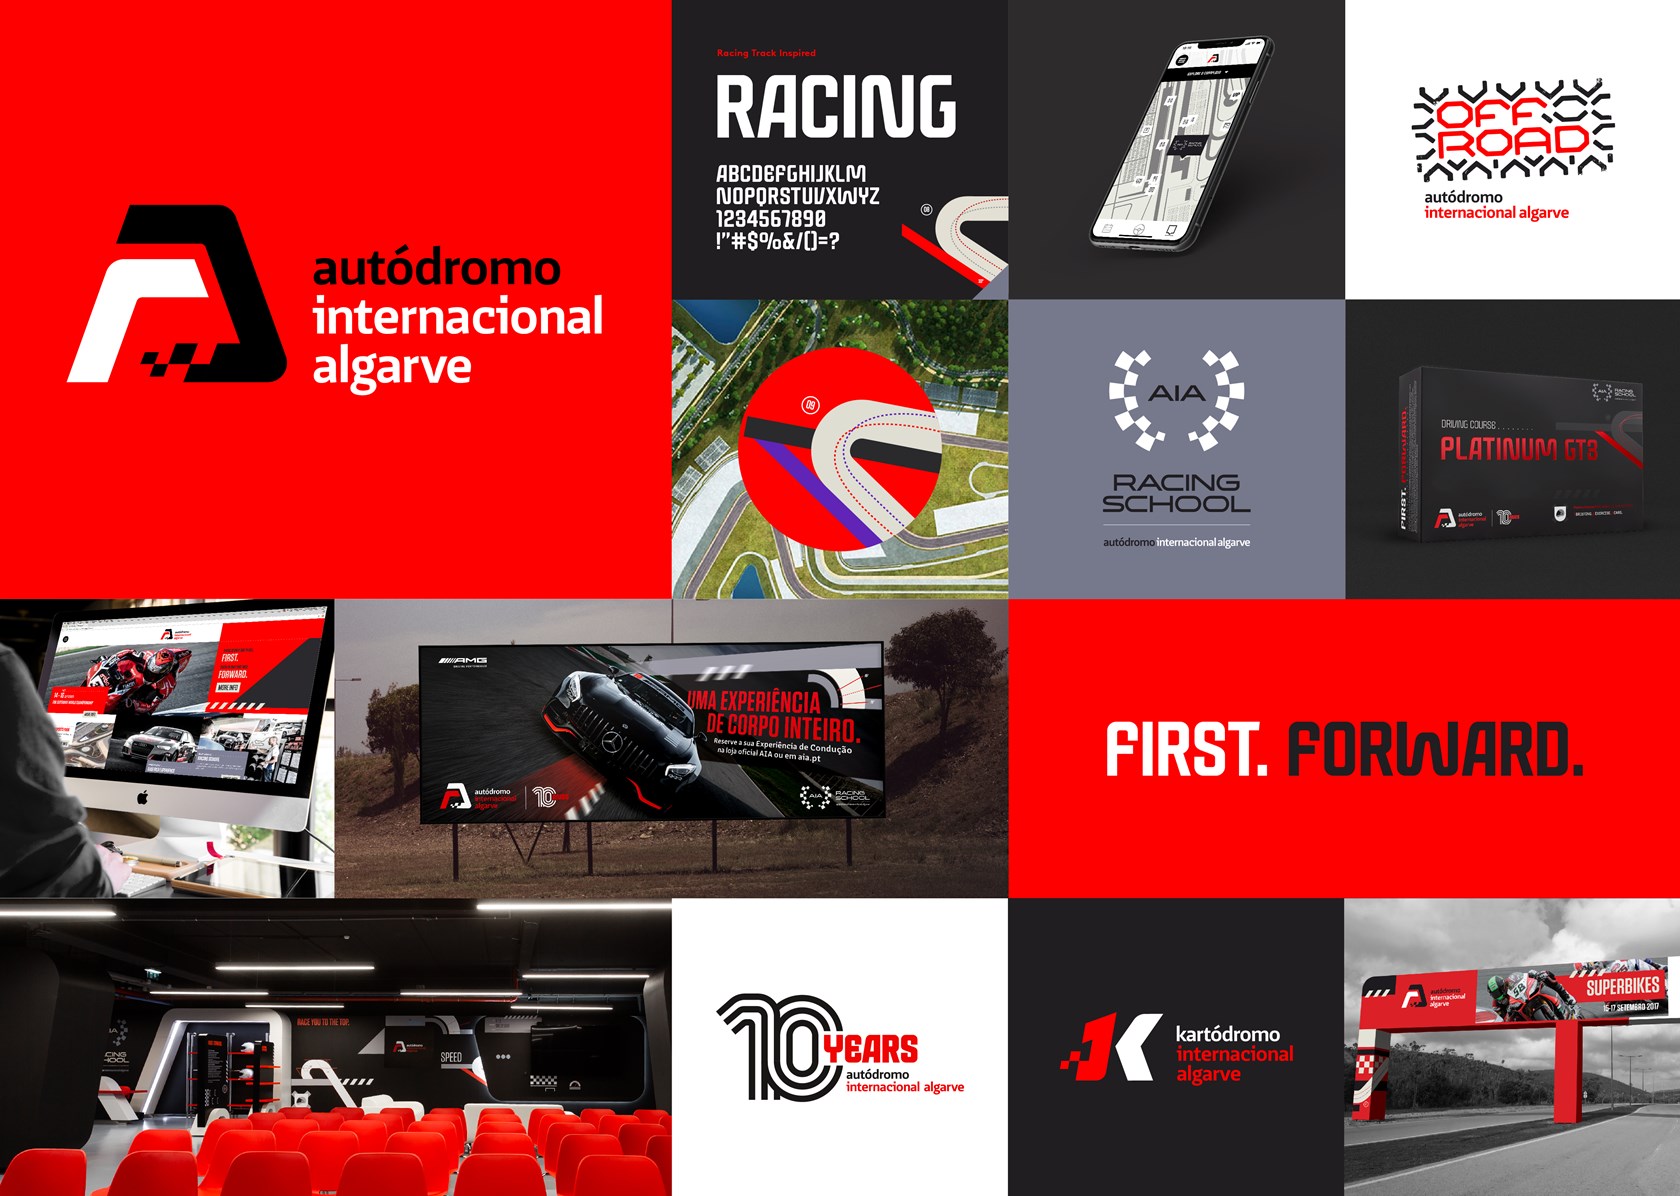 Algarve International Track - 
Brand Pole Positioning